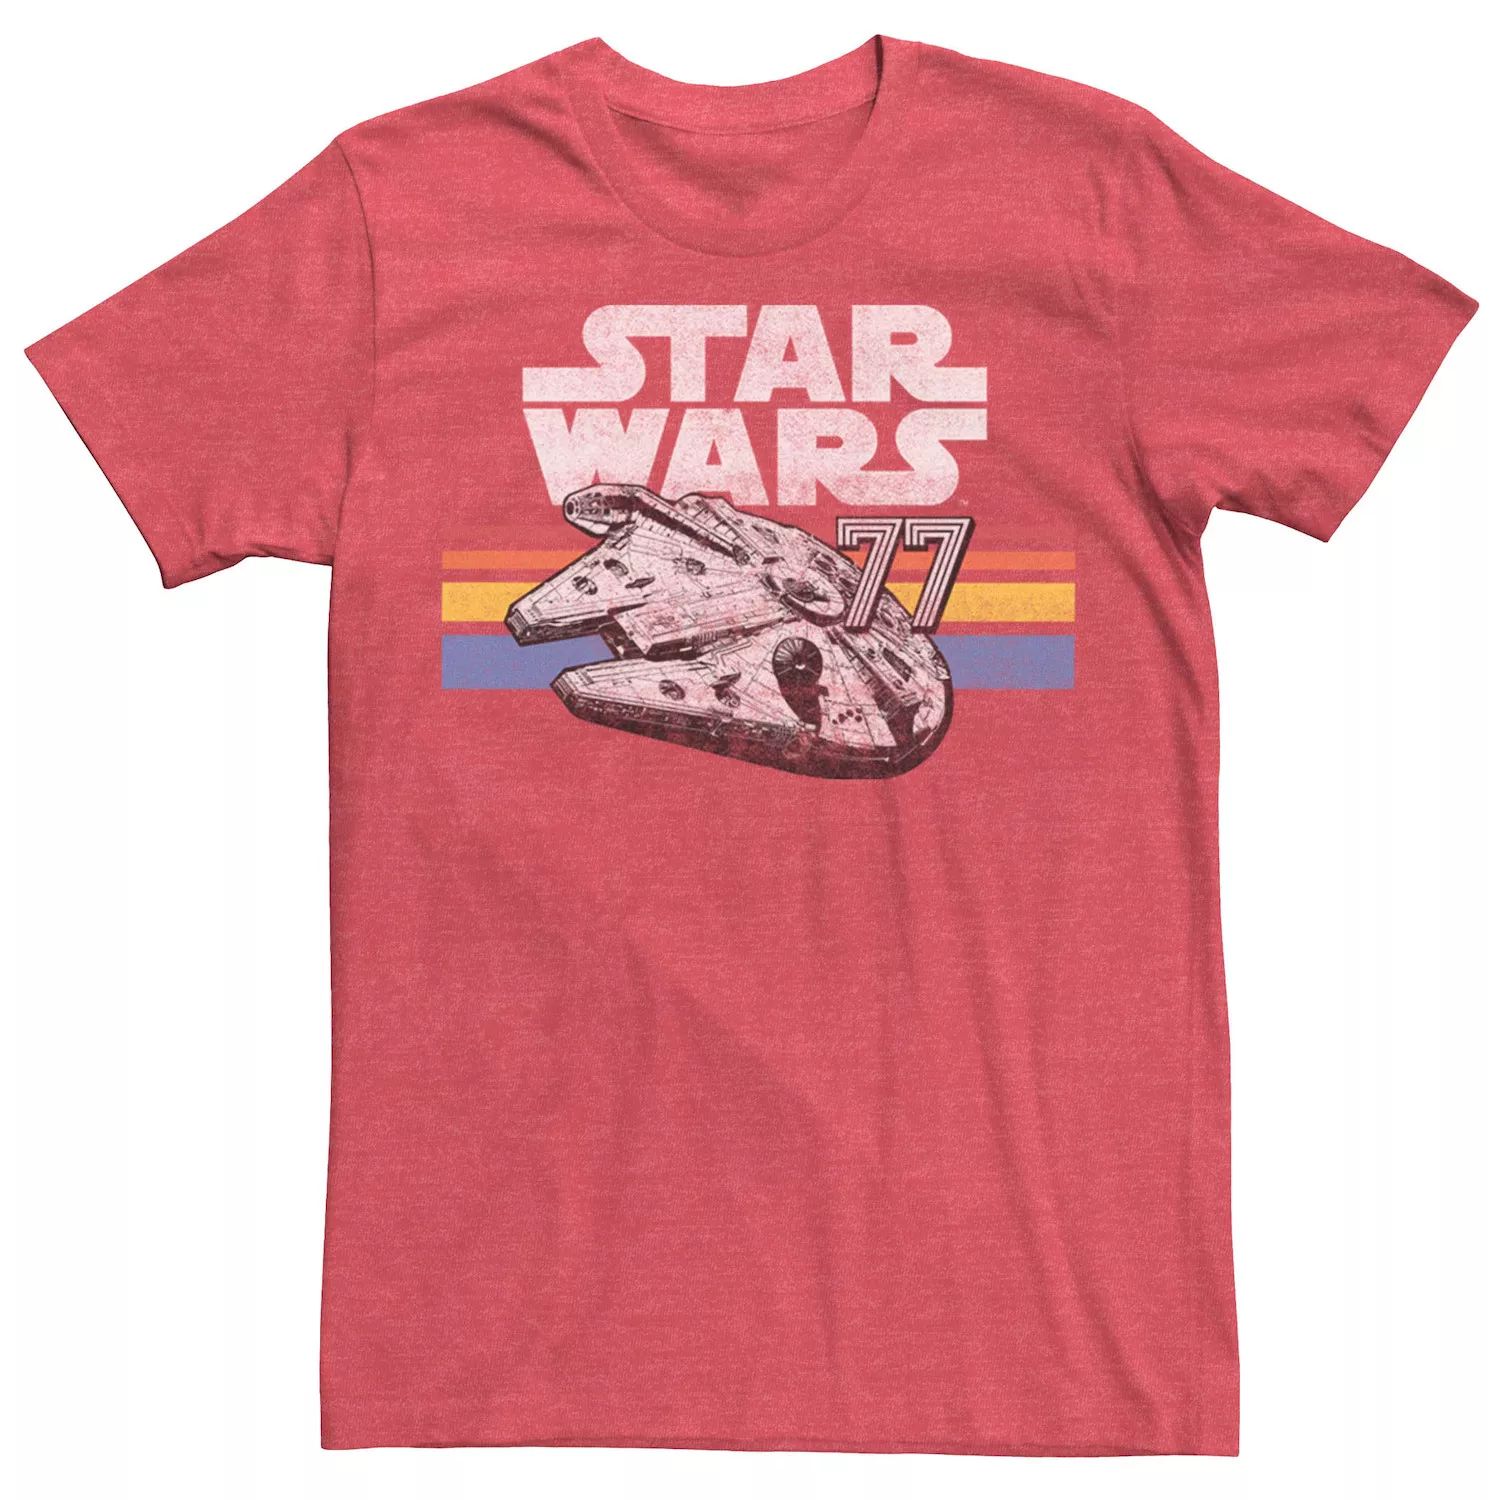 Мужская футболка с логотипом Millennium Falcon 77 Retro Lines Star Wars